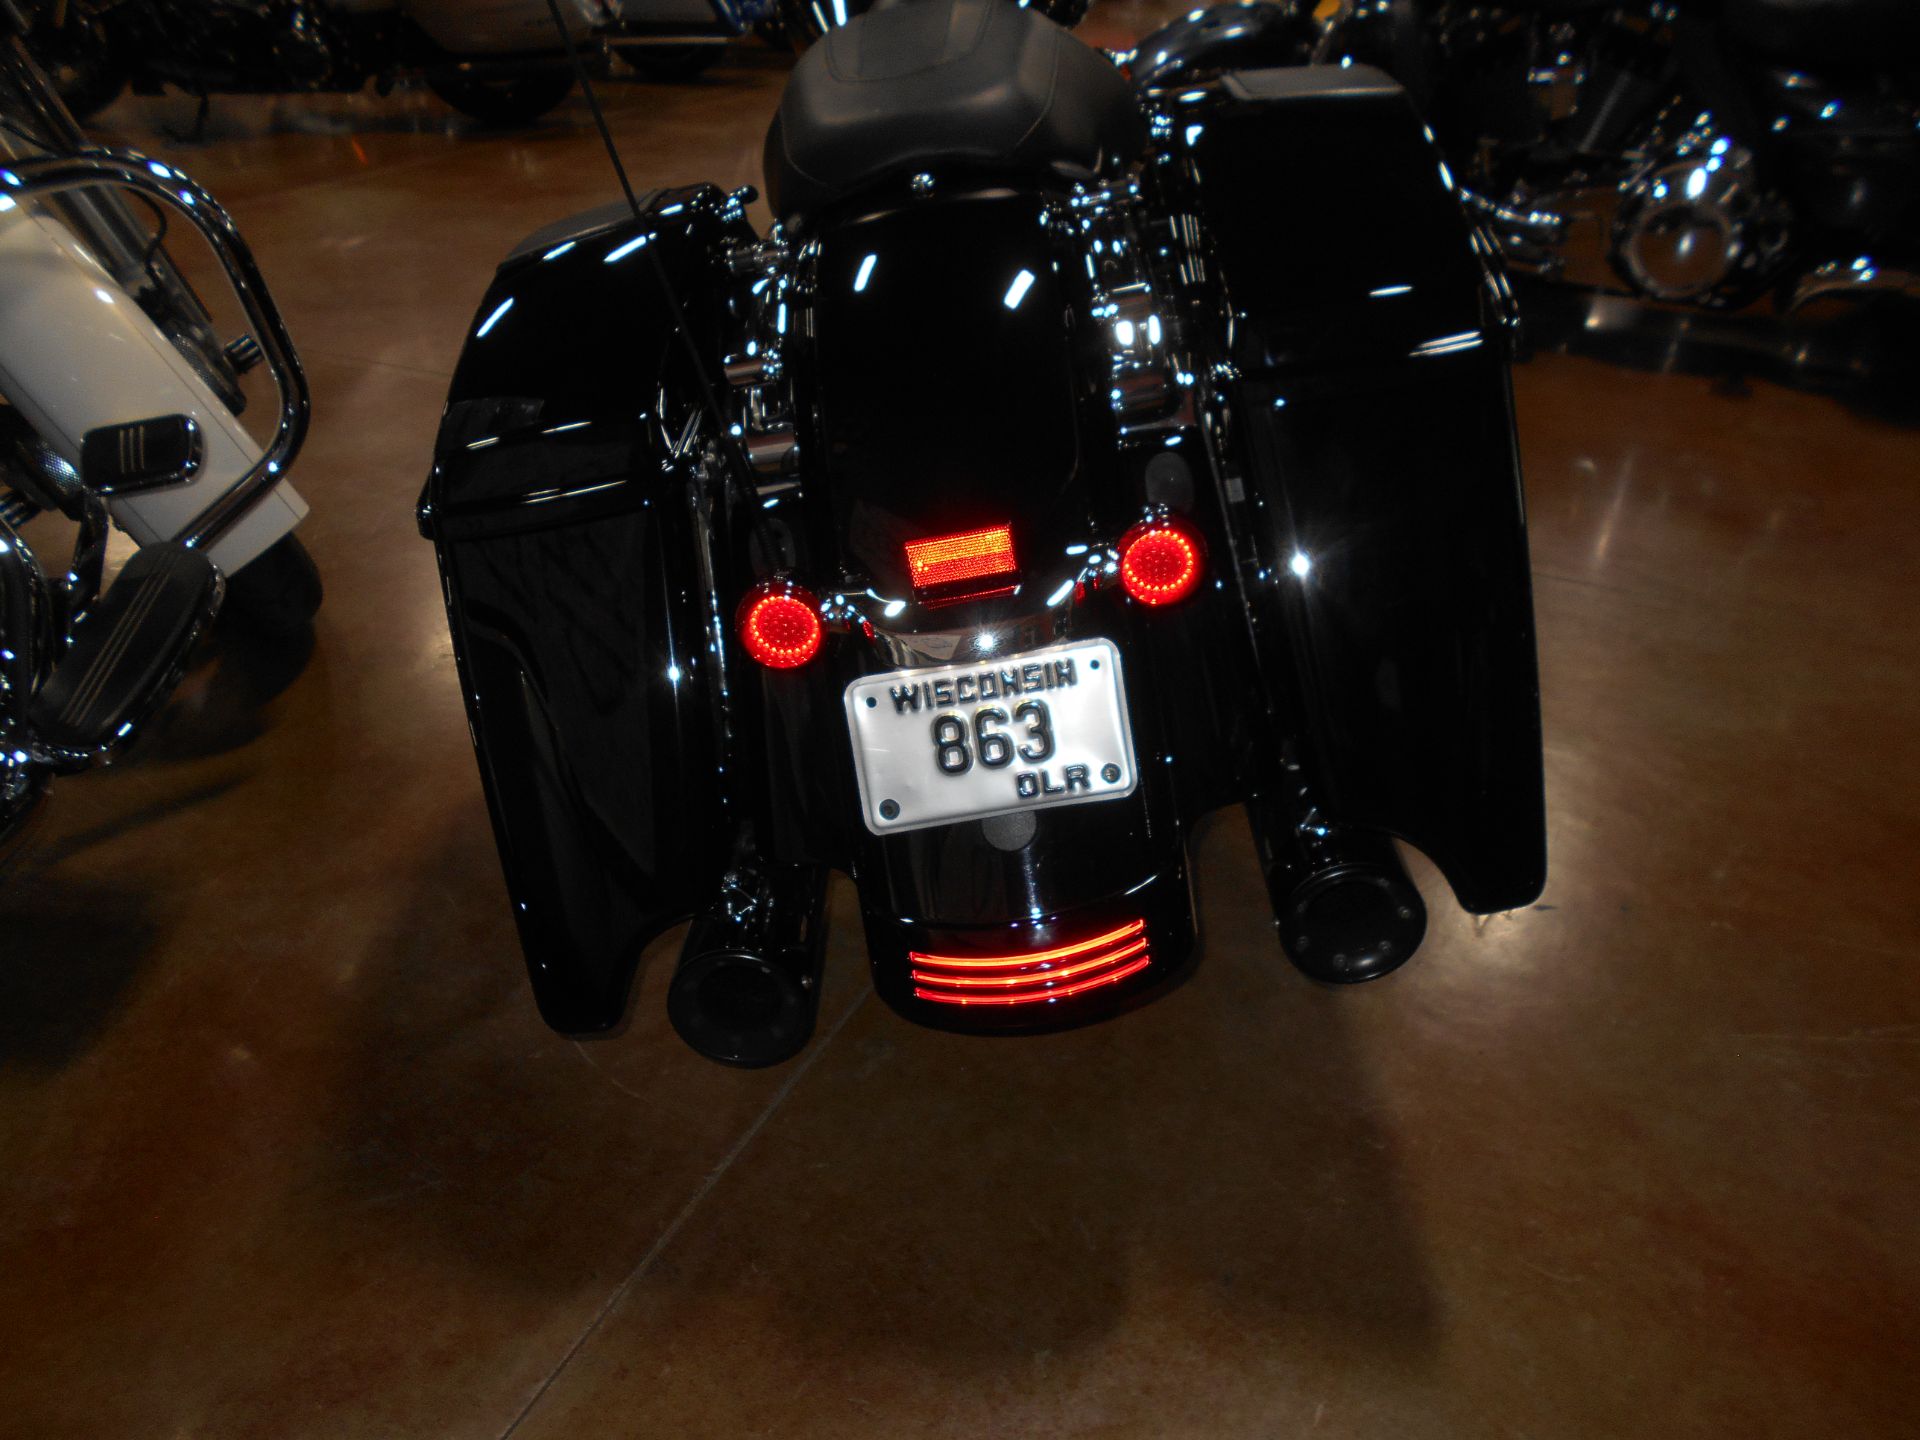 2021 Harley-Davidson Street Glide® Special in Mauston, Wisconsin - Photo 7